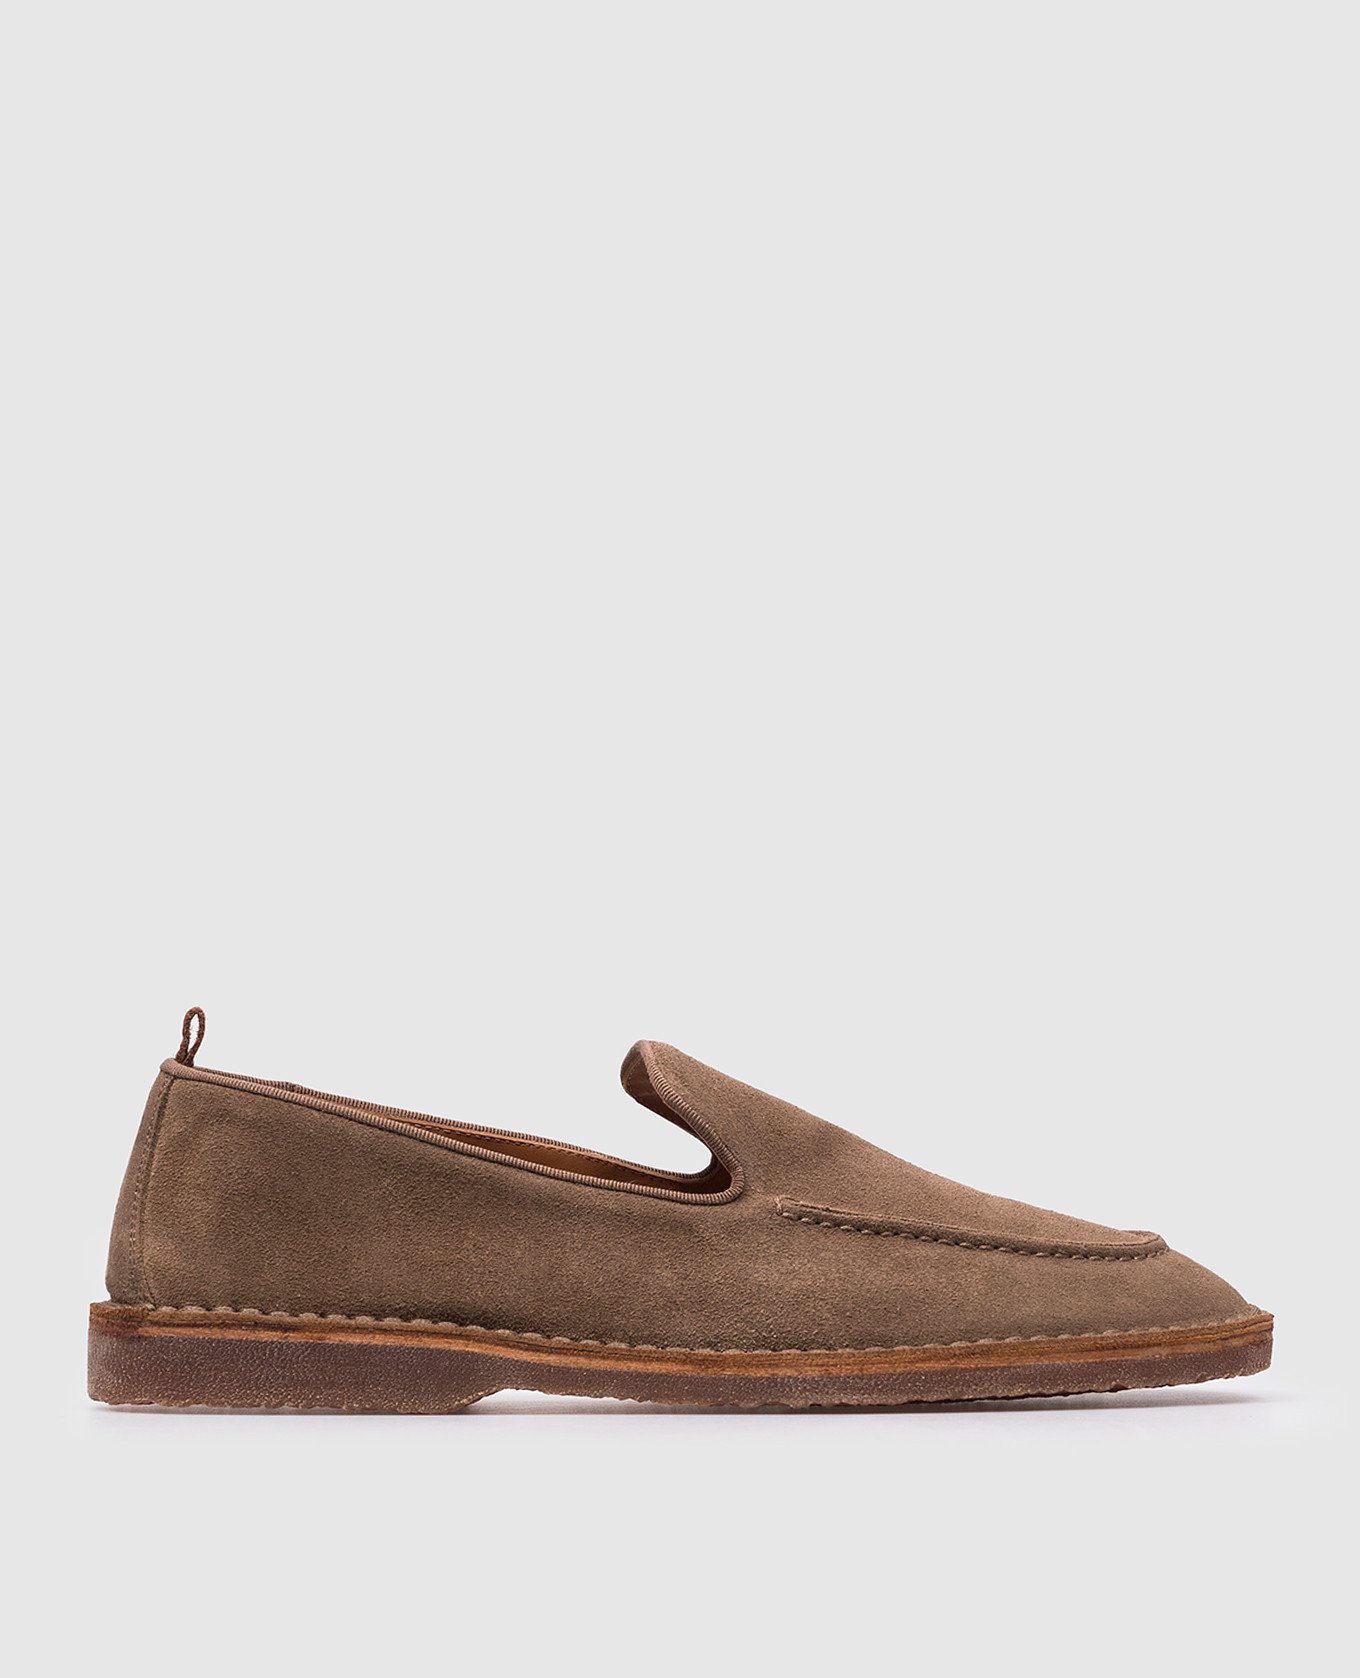 ARGENTARIO logo loafers in brown suede